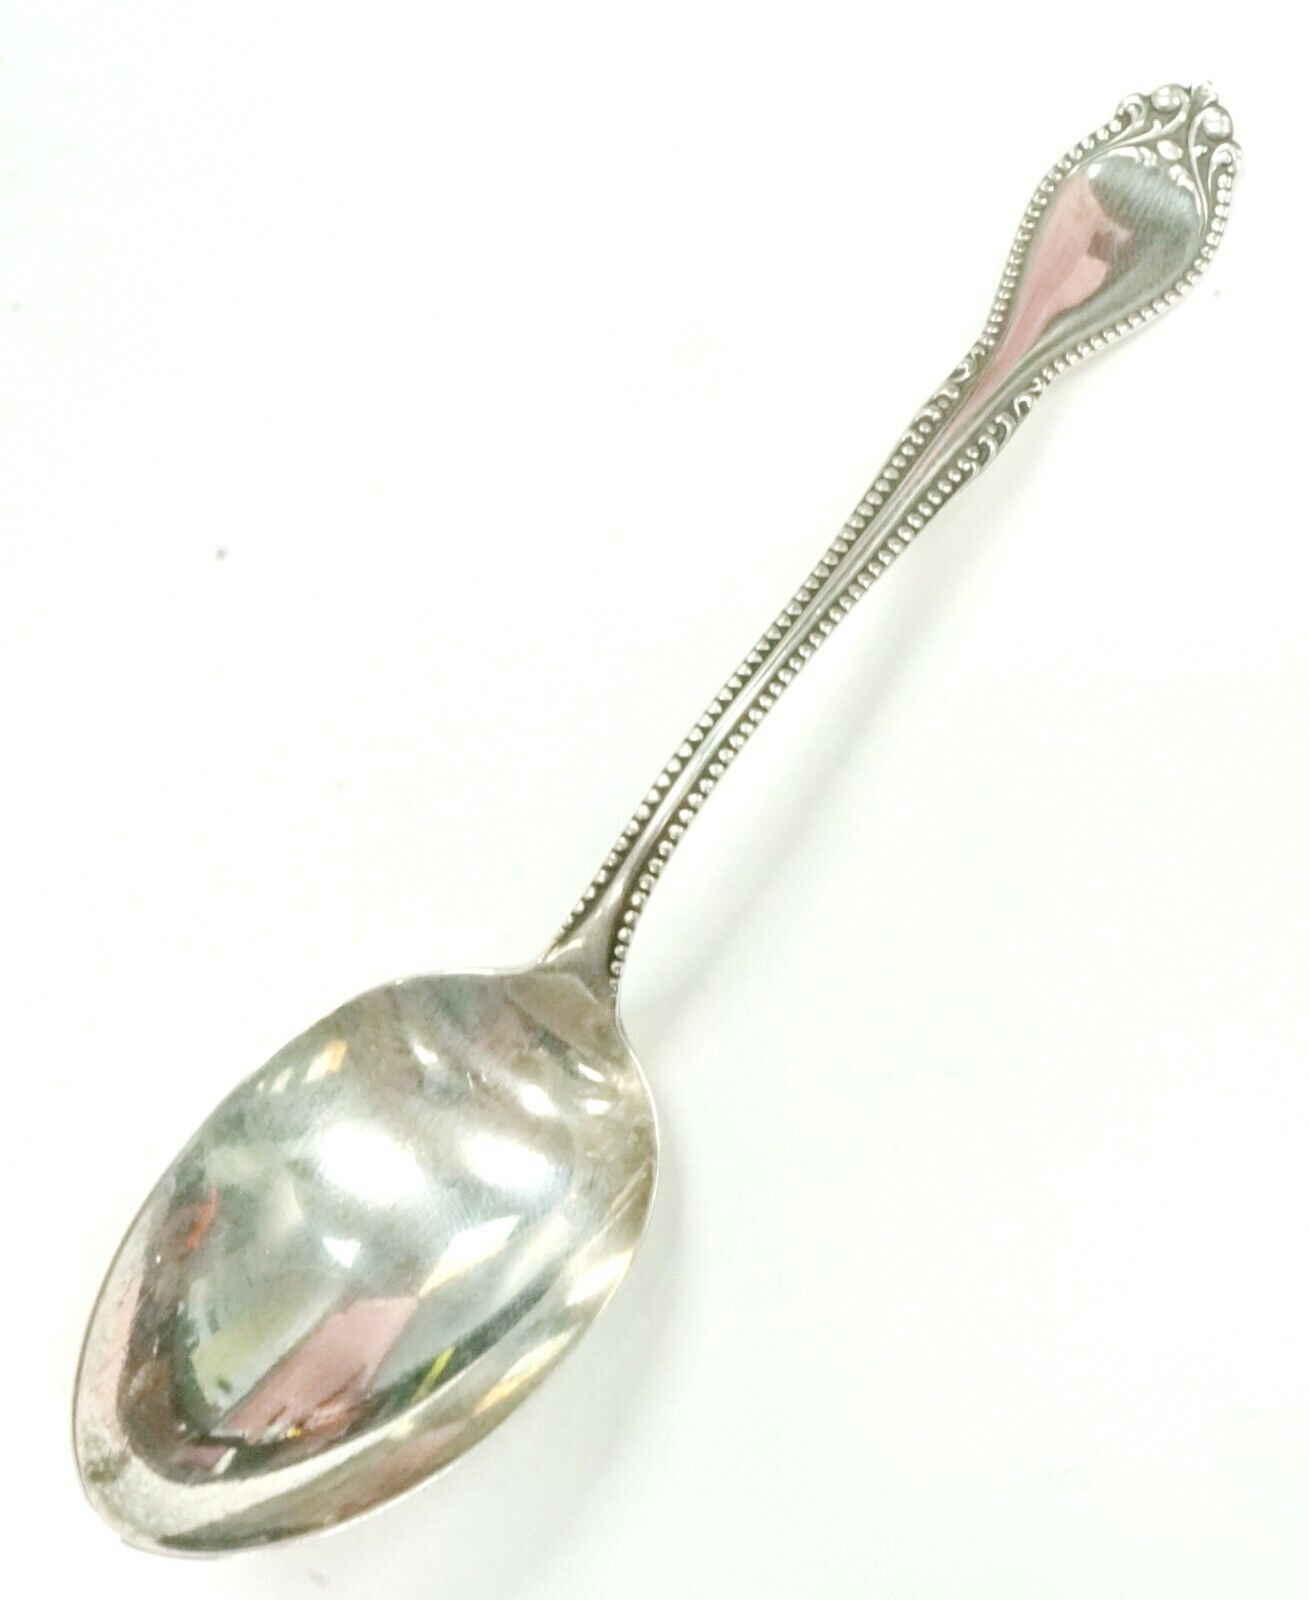 Lunt Provence Teaspoon Sterling  Silver .925 Monogramed C.L.R.